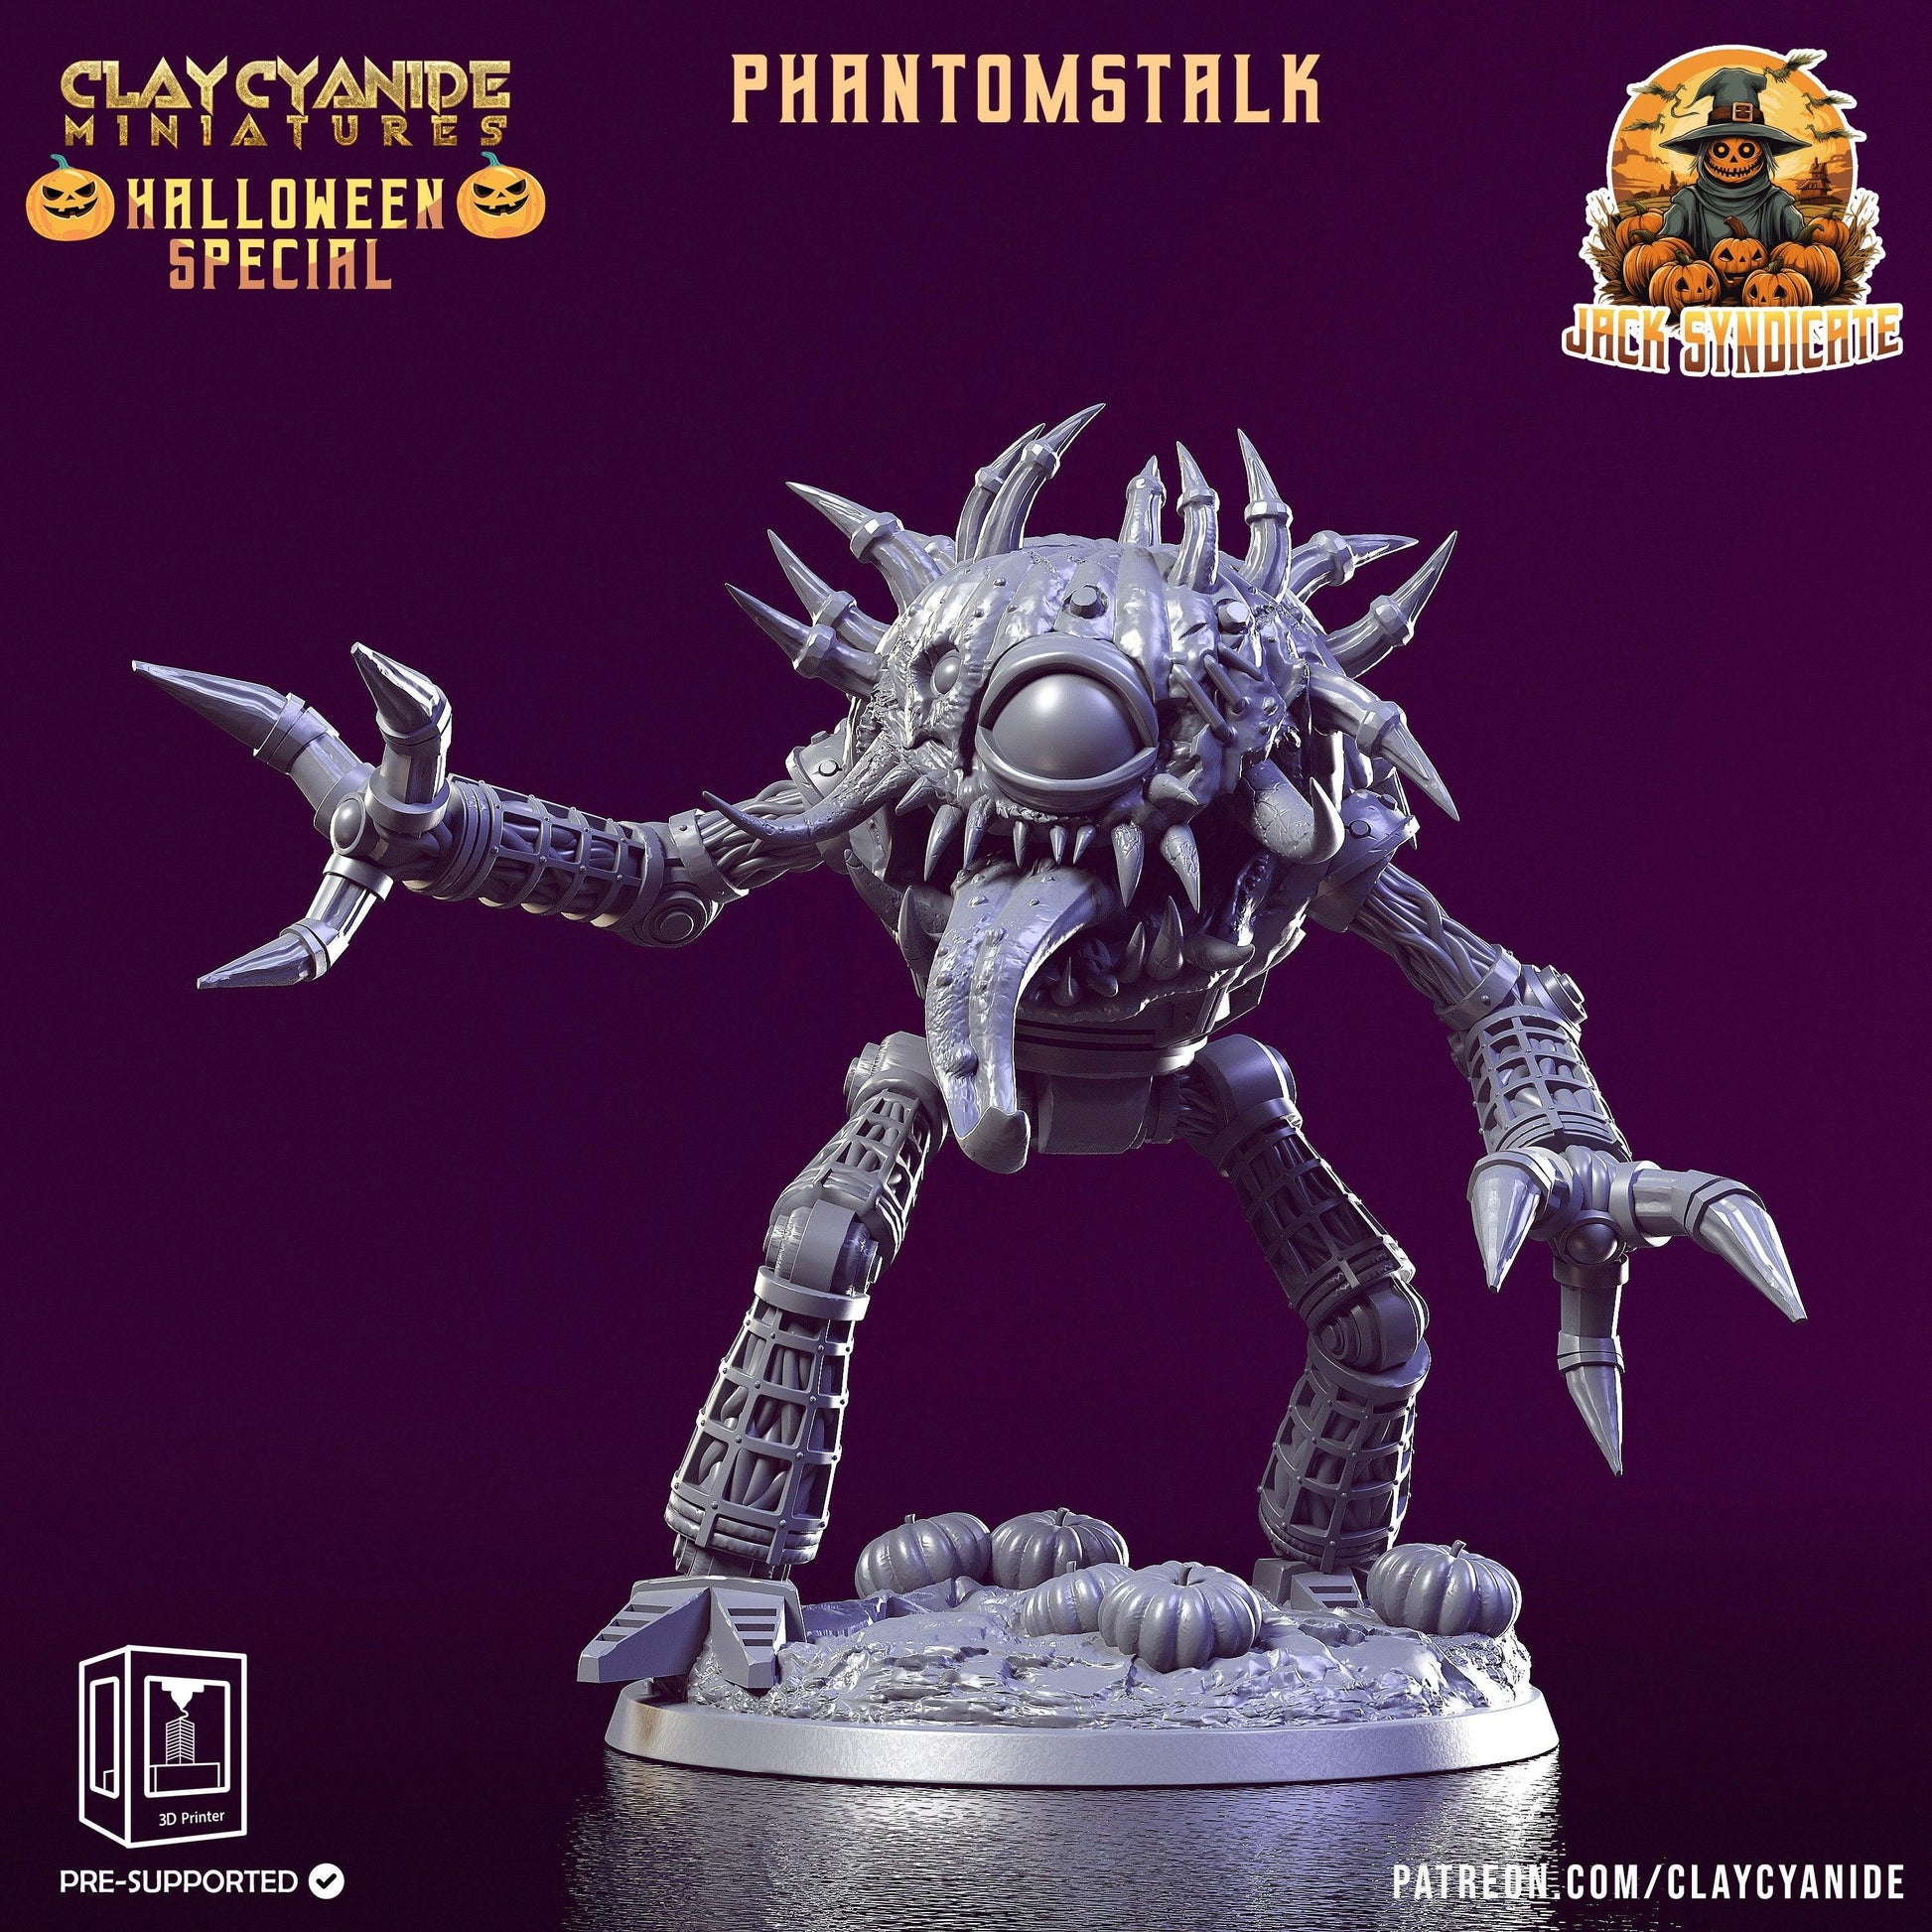 Phantomstalk DnD Skeleton Miniature | Eerie Halloween Monster | 32mm Scale - Plague Miniatures shop for DnD Miniatures